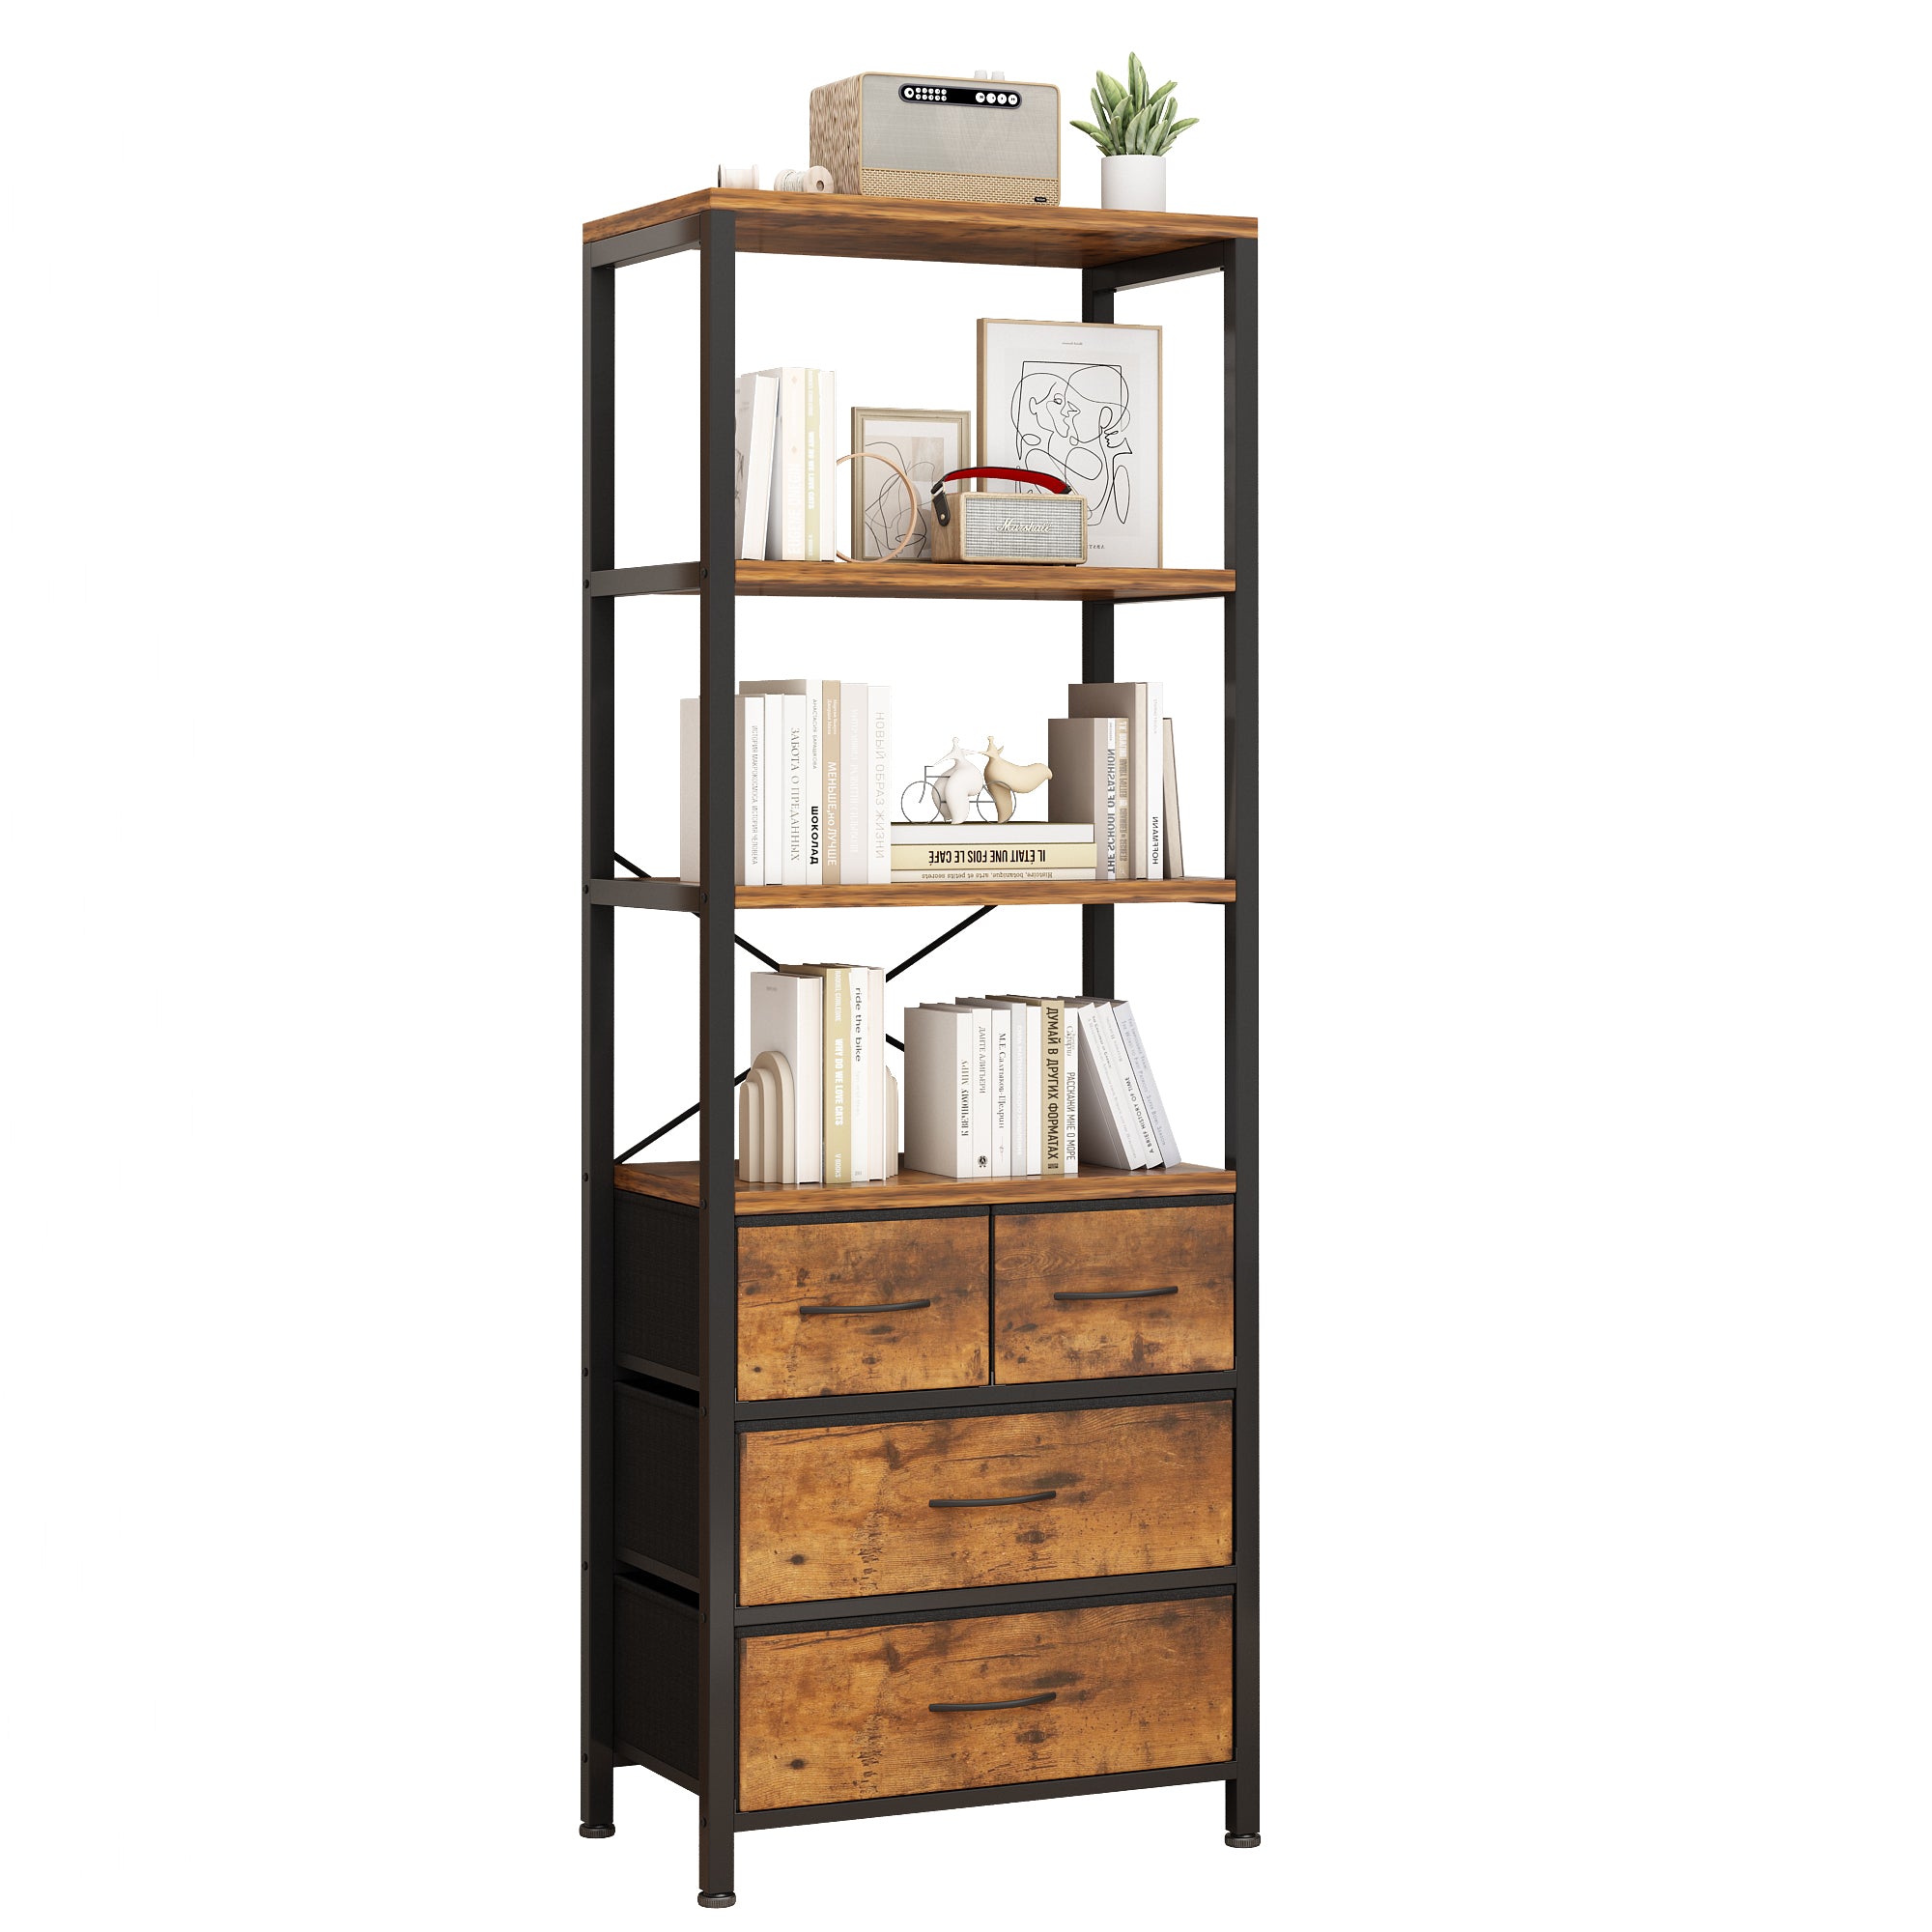 6-Layer Bookshelf with 3 Drawers – 60x35x174cm, Retro Brown